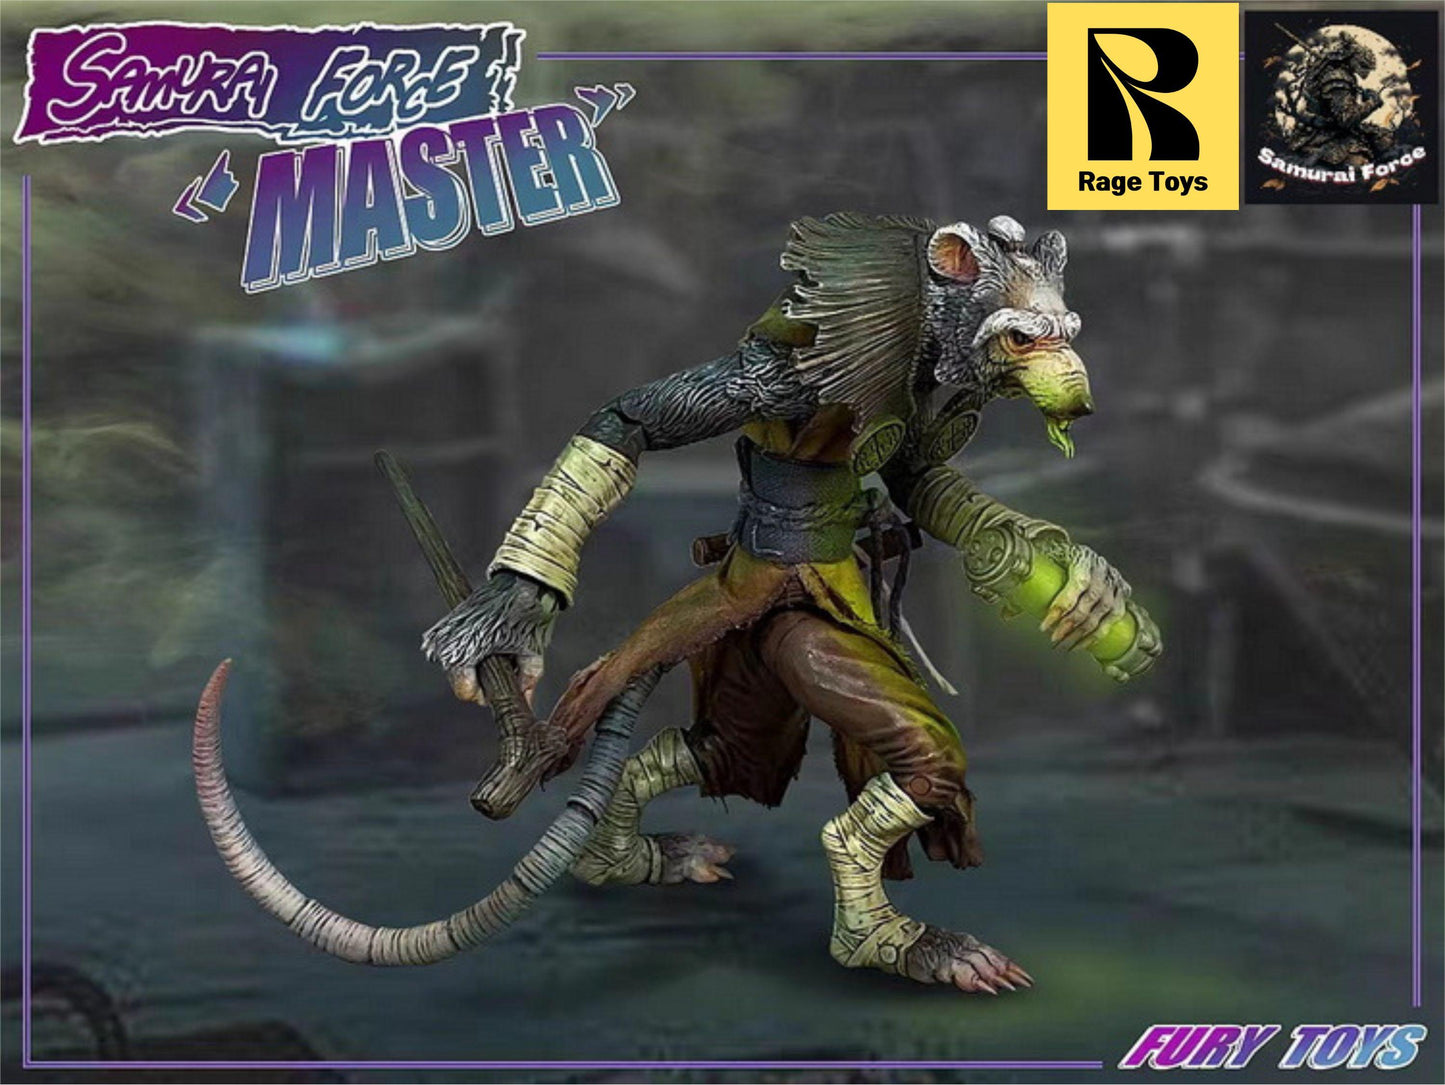 Rage Toys Samurai Force wave 2 The Master figure